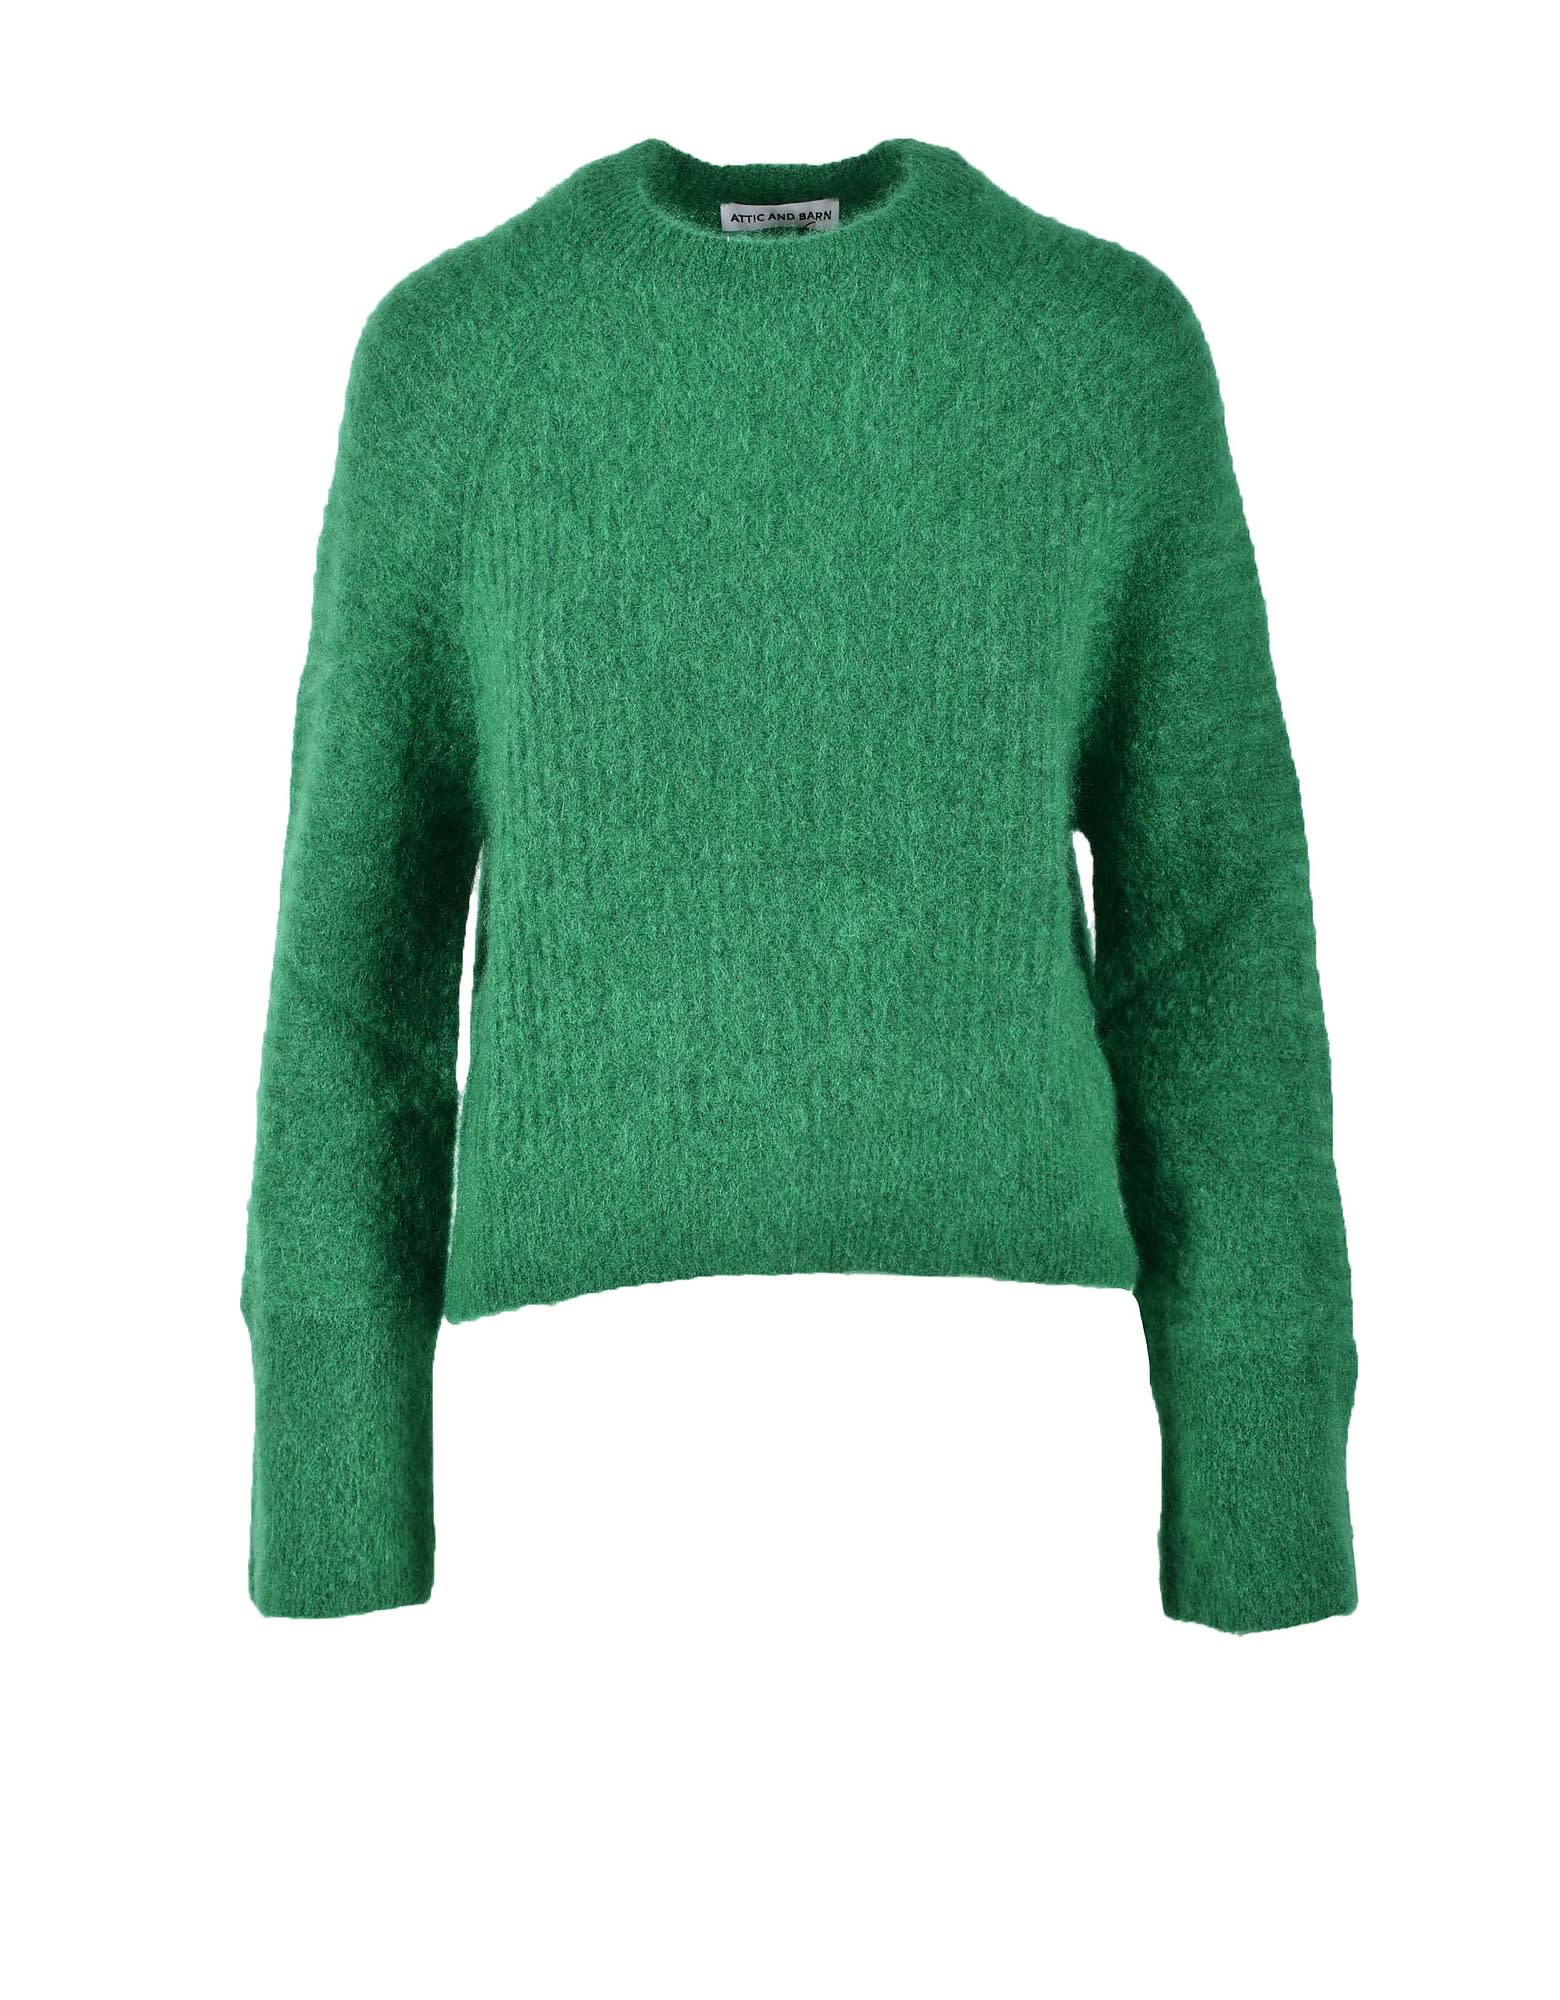 Attic and Barn Womens Green Sweater